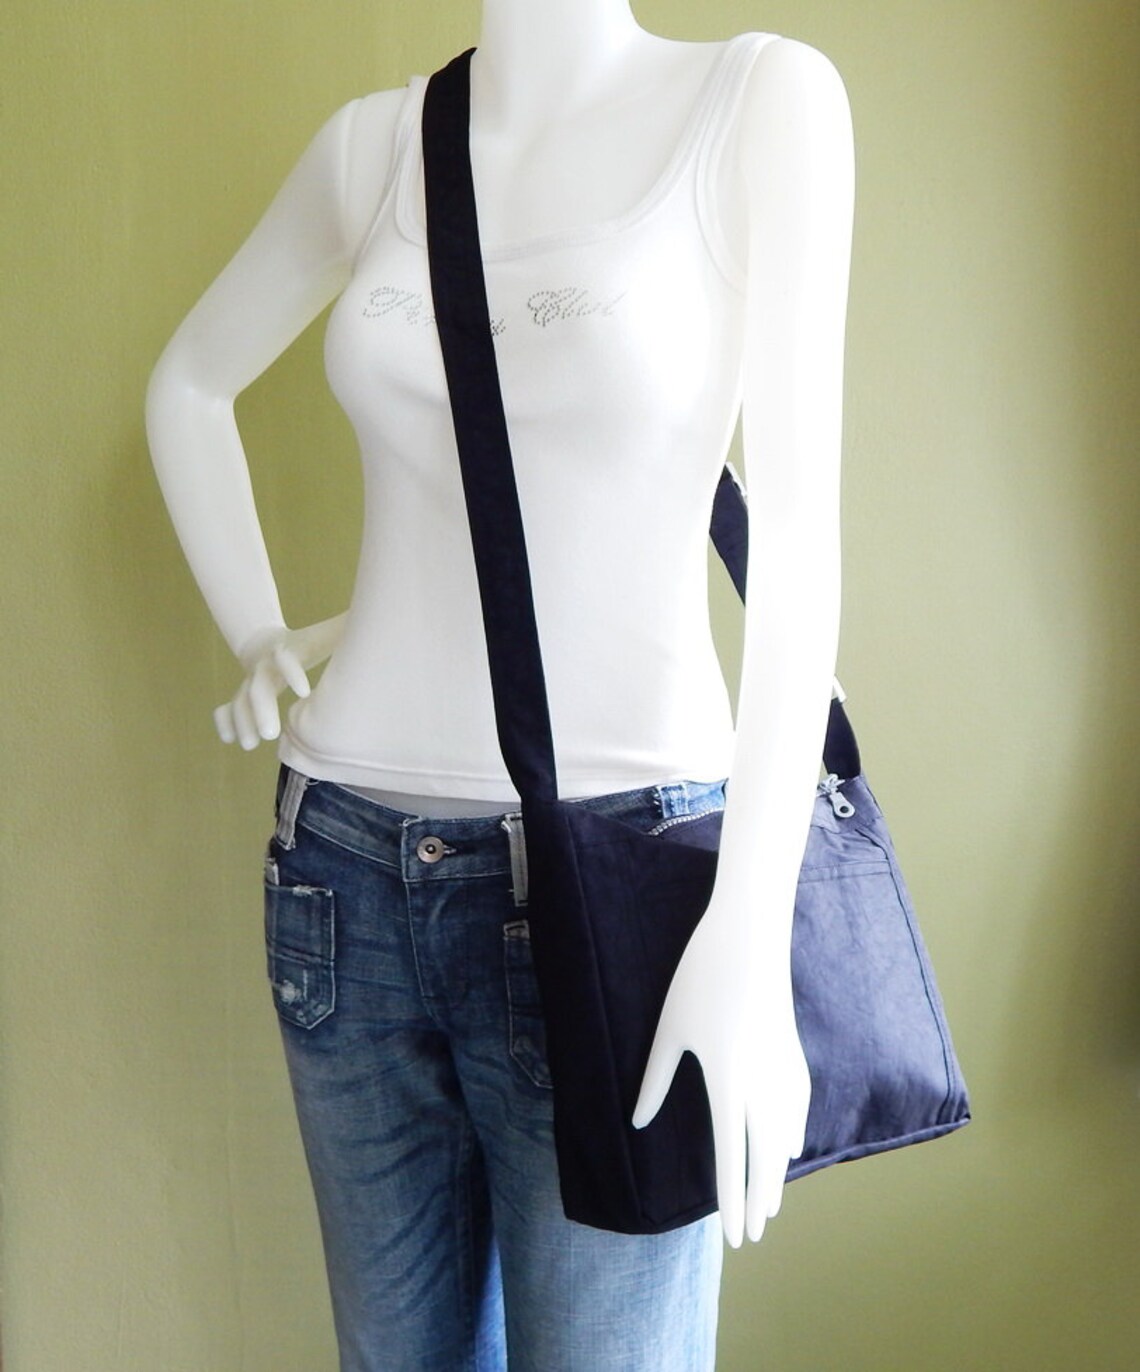 Black Water Resistant Nylon Bag Cross Body Bag Shoulder - Etsy